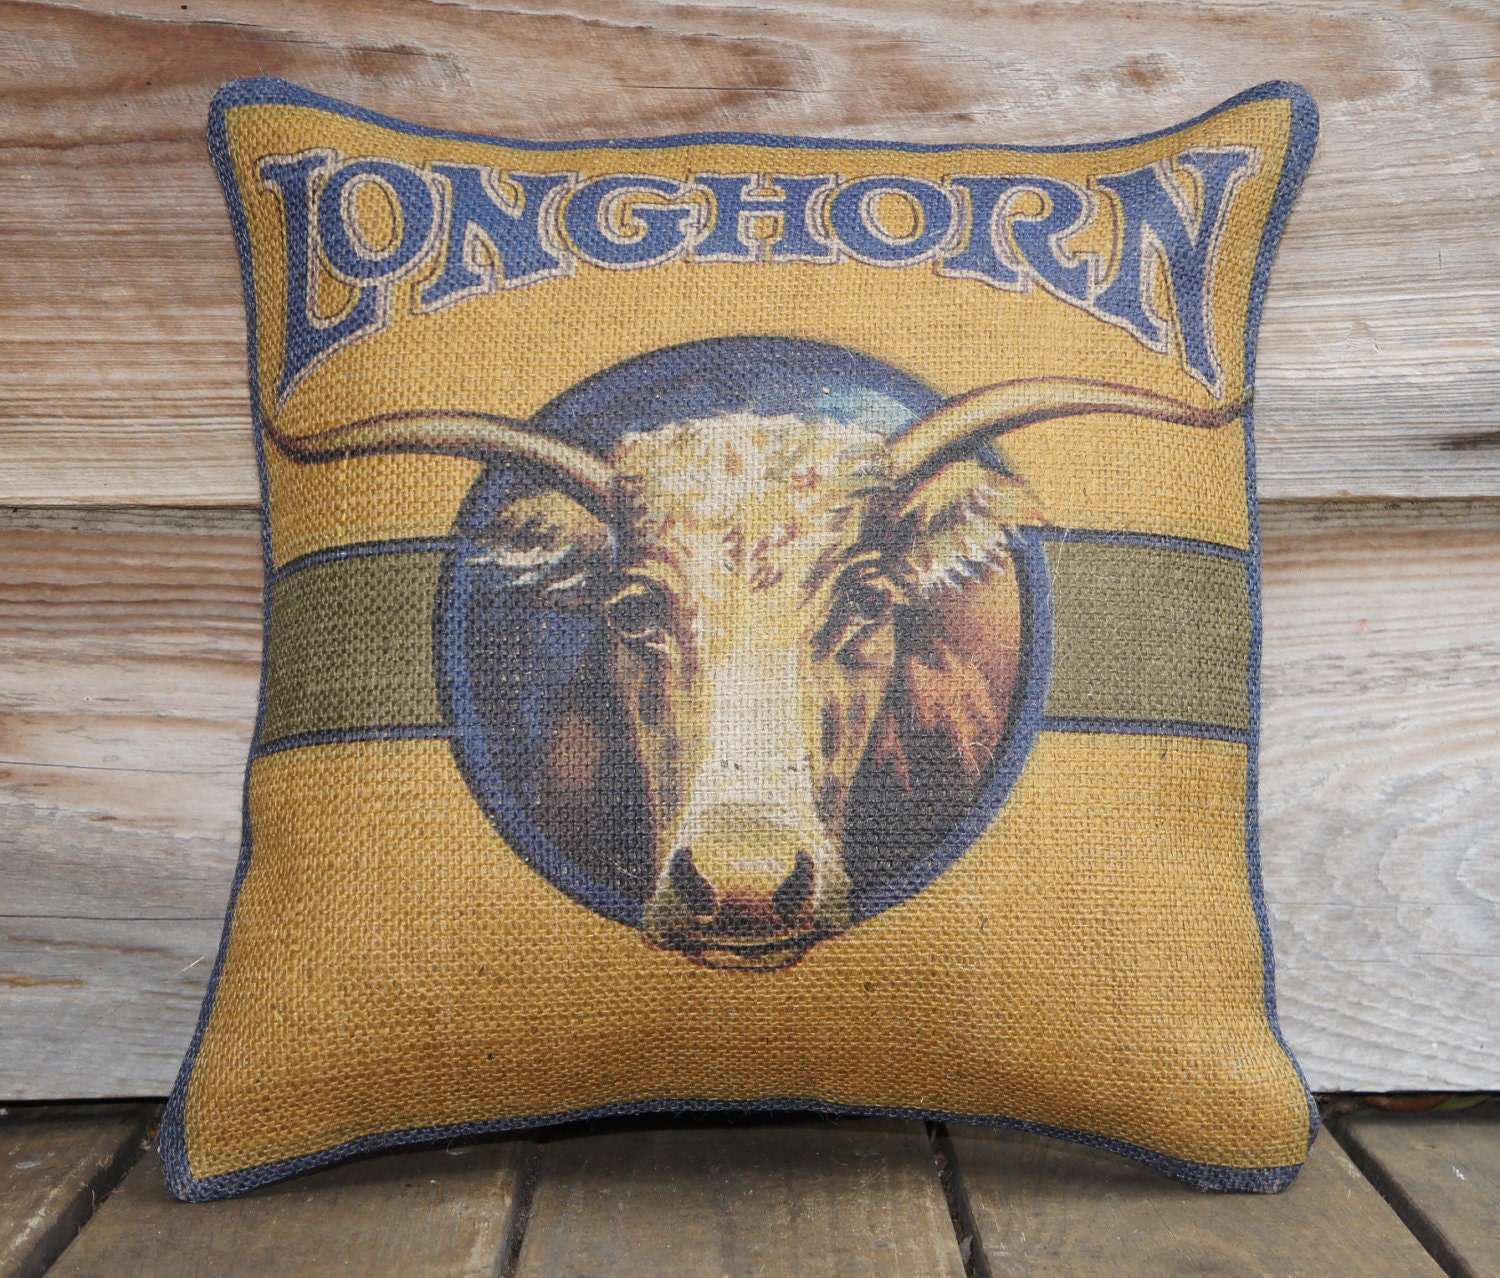 Longhorn Pillow Cover, Burlap Throw Pillow, Country Living, 16x16